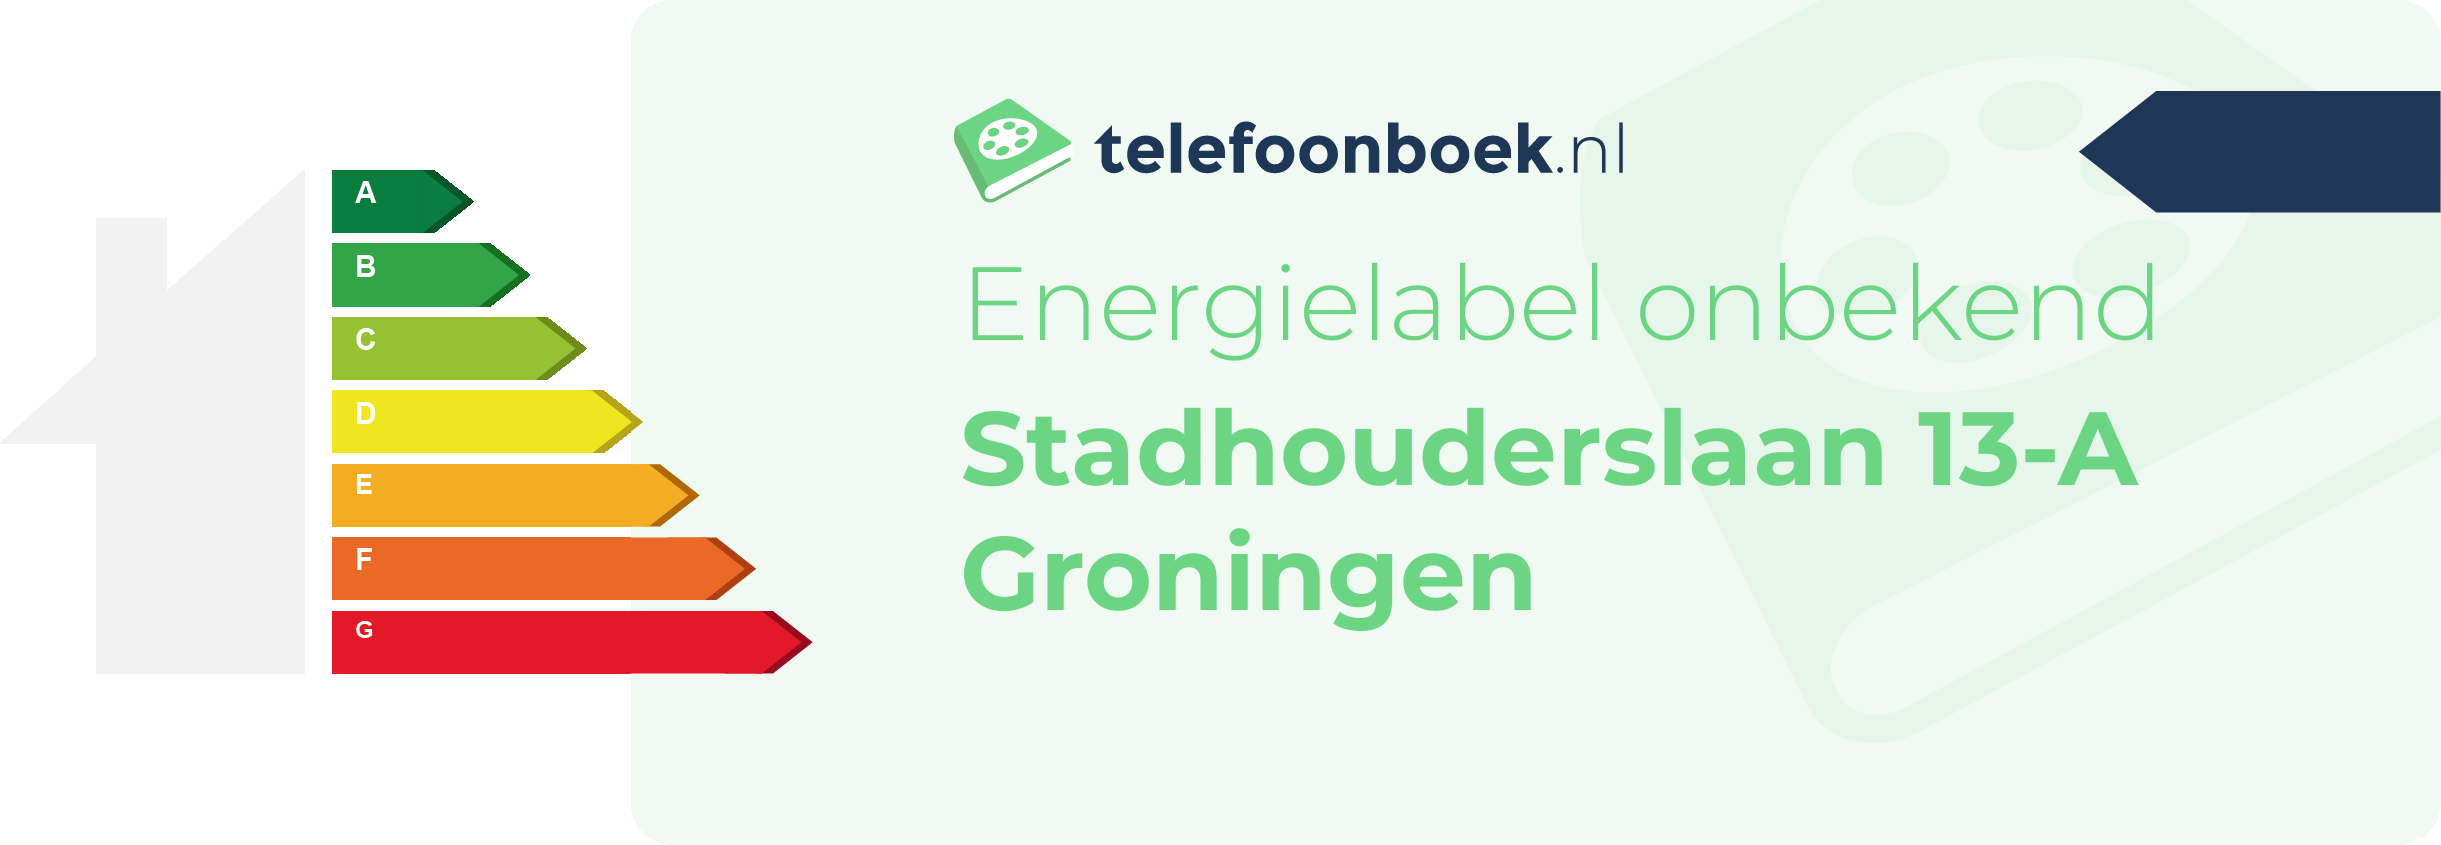 Energielabel Stadhouderslaan 13-A Groningen